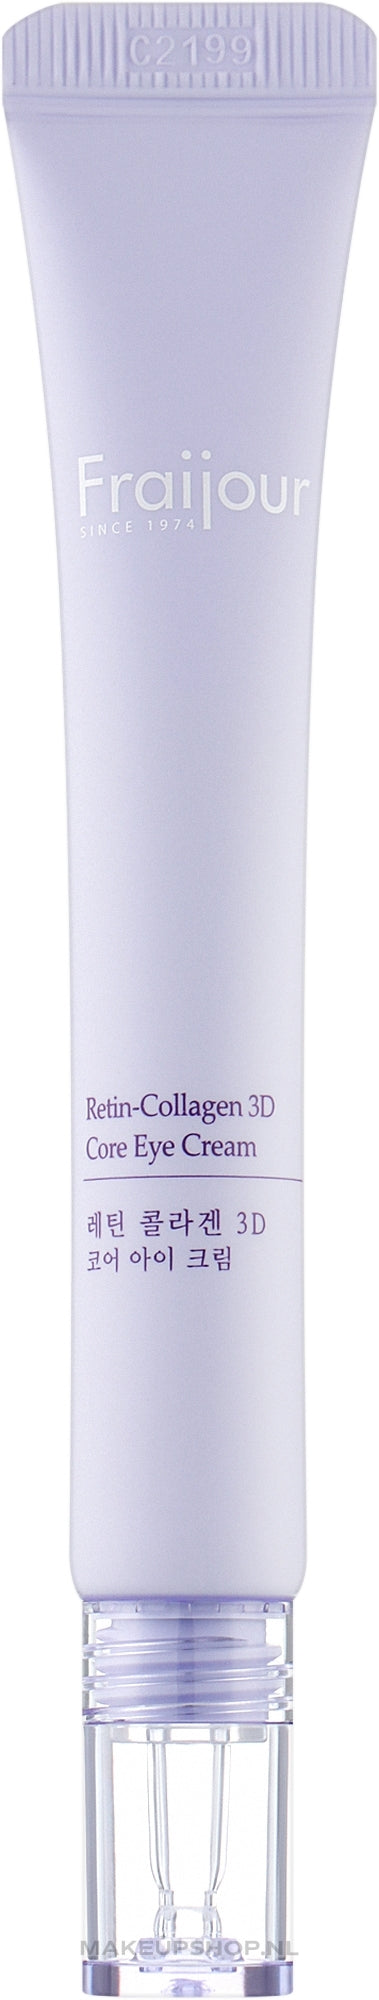 Fraijour Retin-Collagen 3D Core Eye Cream 15ml